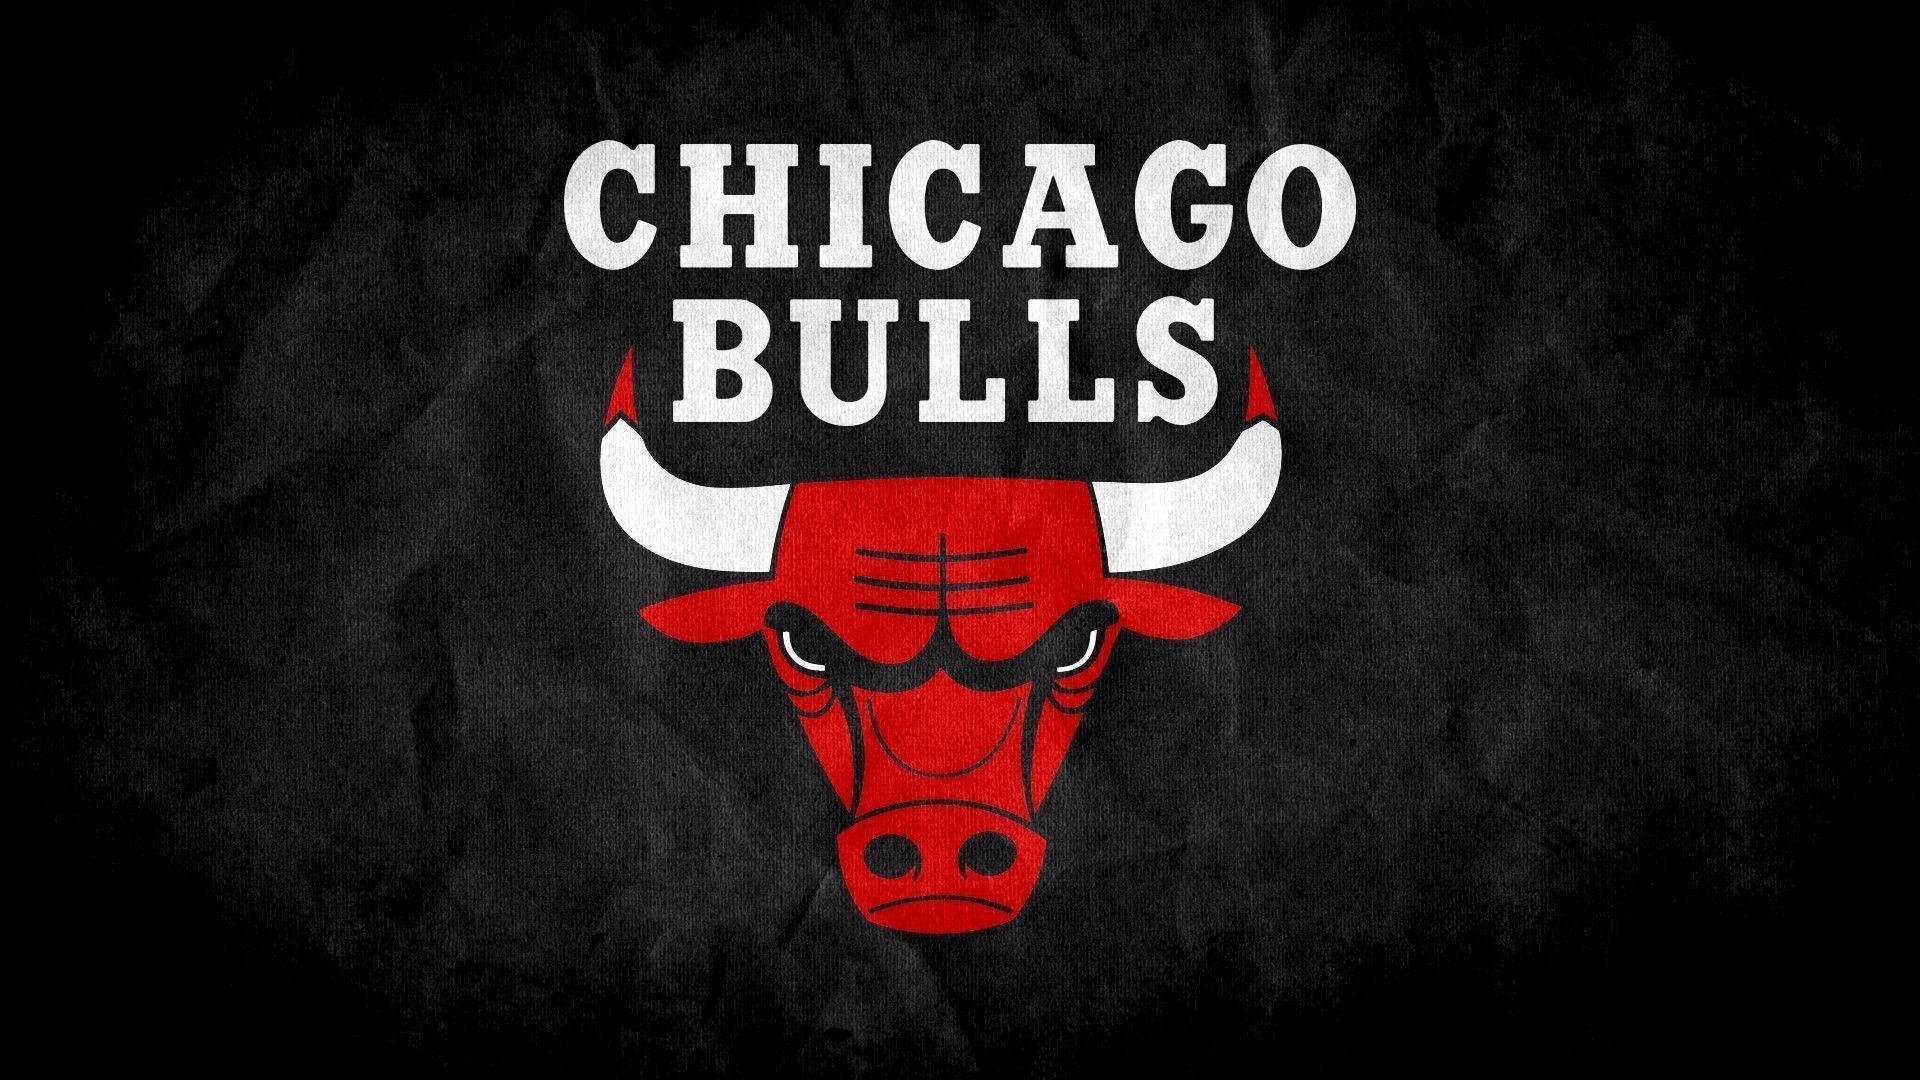 Chicago Bulls wallpaper. Chicago Bulls background